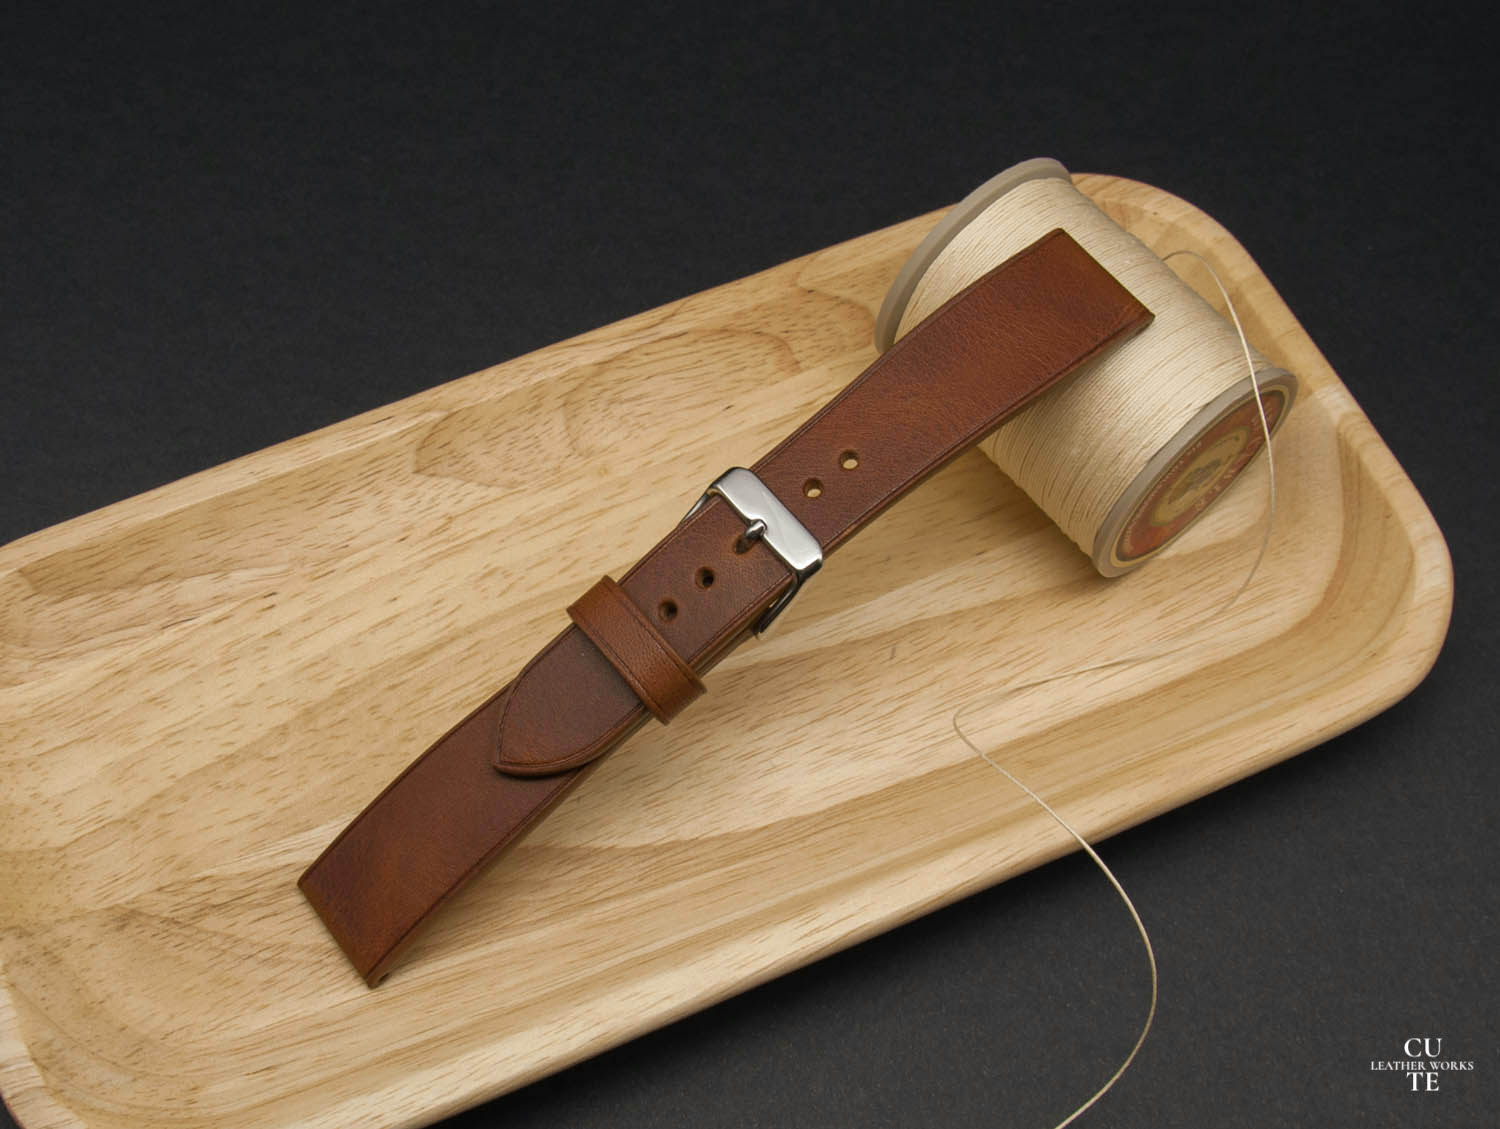 Badalassi Carlo Wax Cognac Leather Watch Strap, Non-stitched